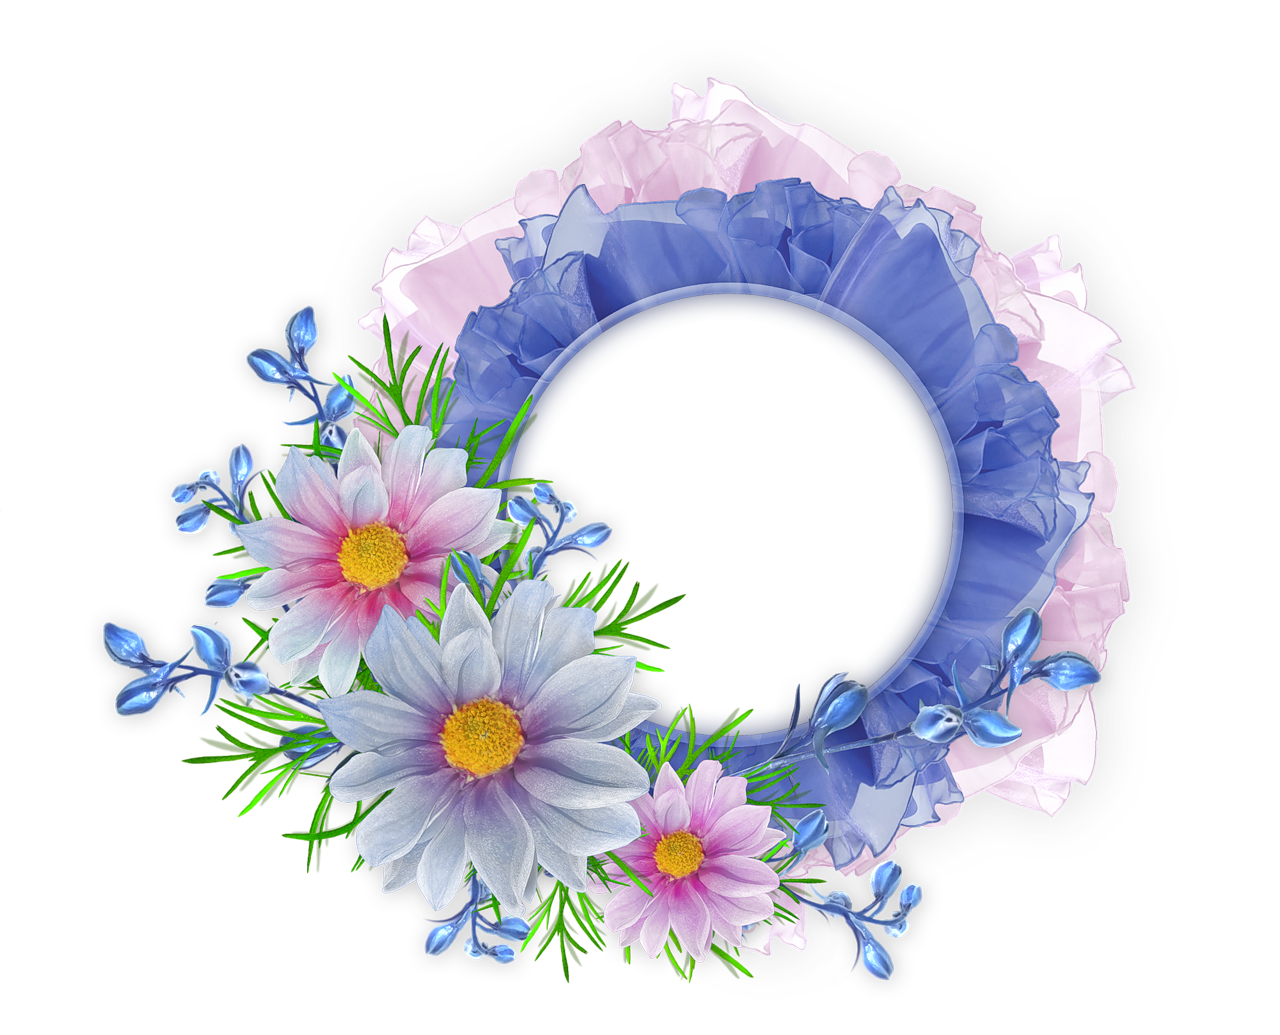 Gambar PNG border floral blue